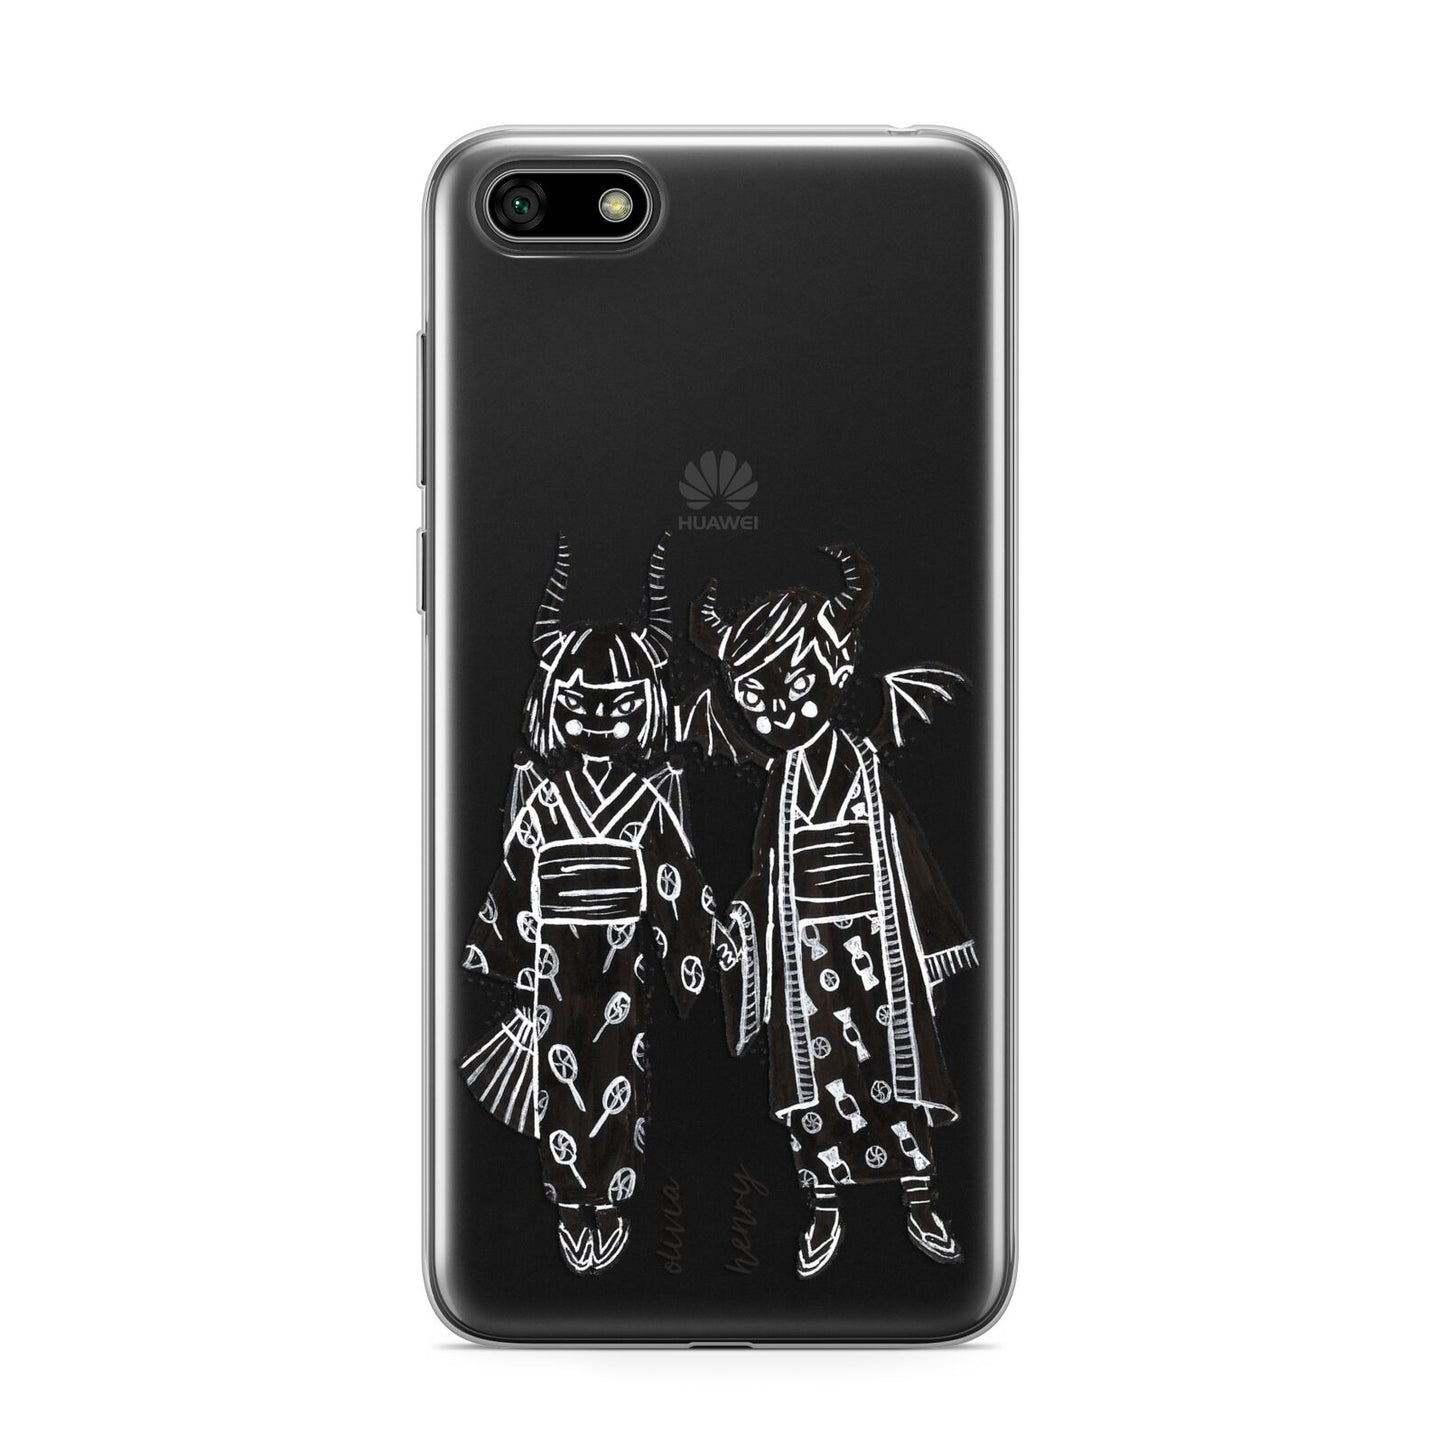 Kimono Devils Huawei Y5 Prime 2018 Phone Case